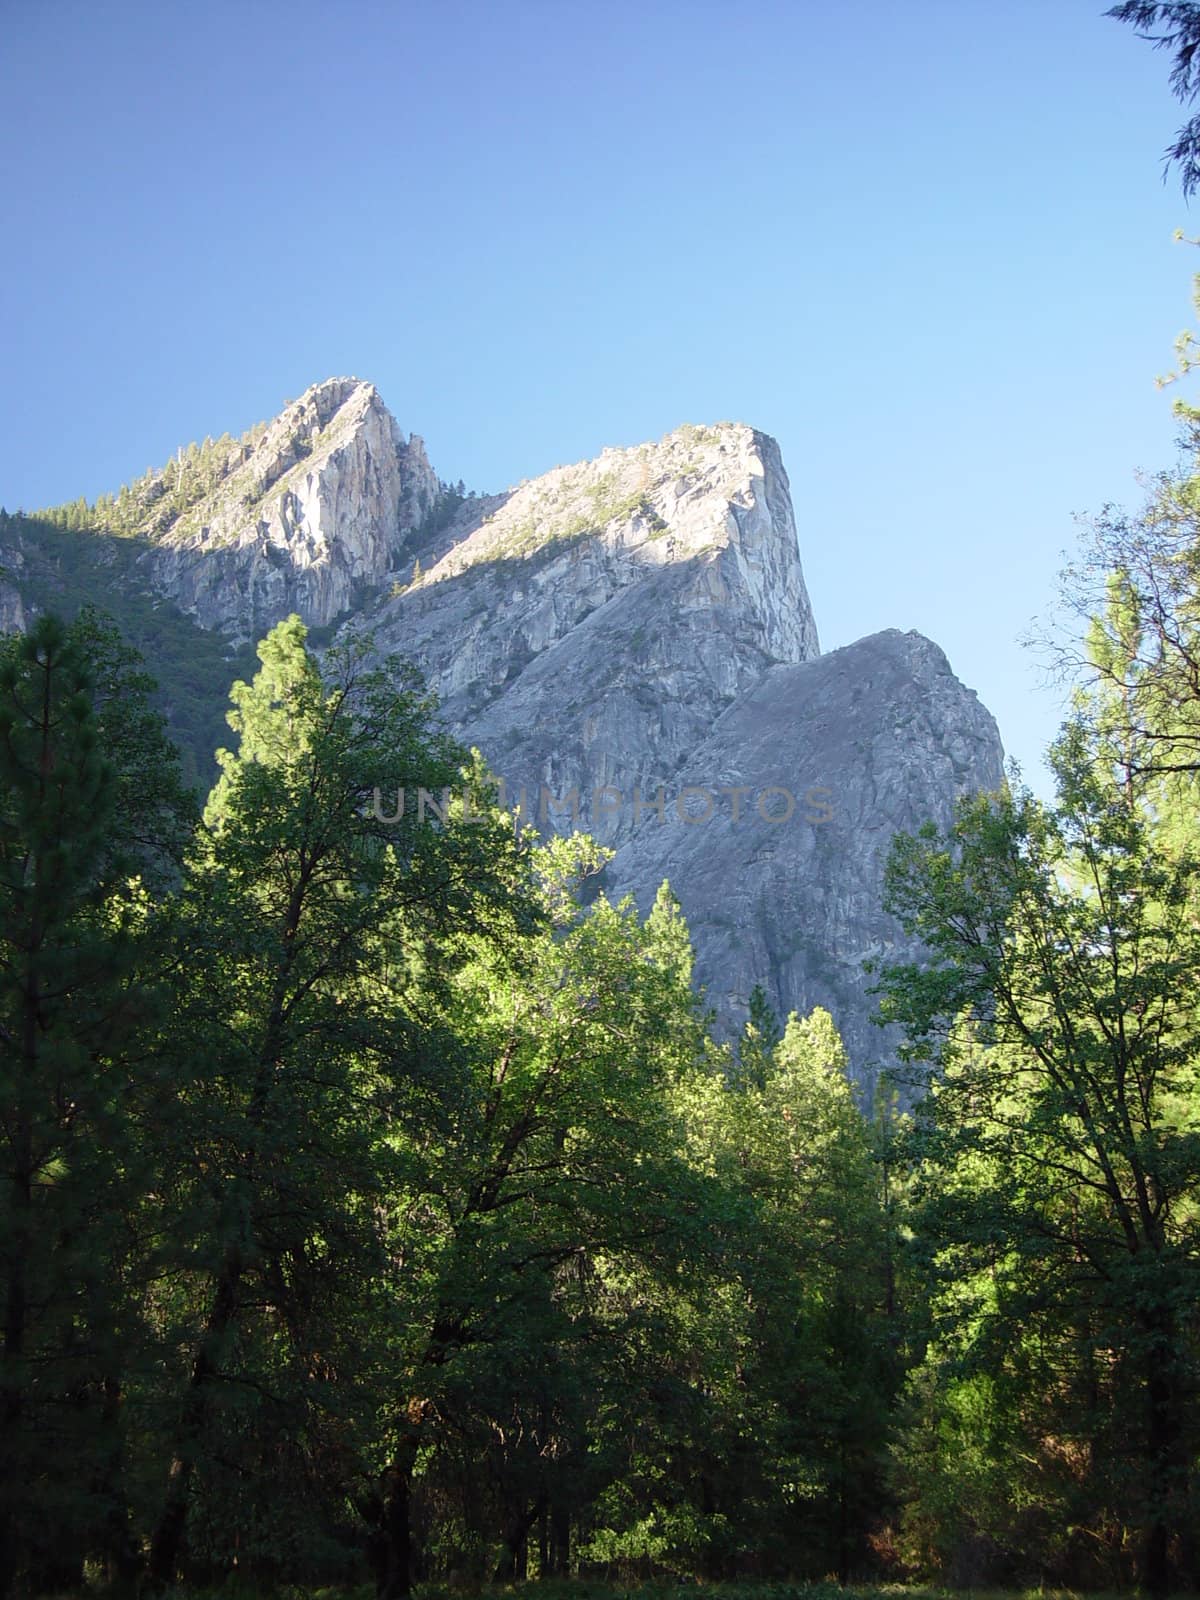 Three peaks of white granite in Yosemite National Park.